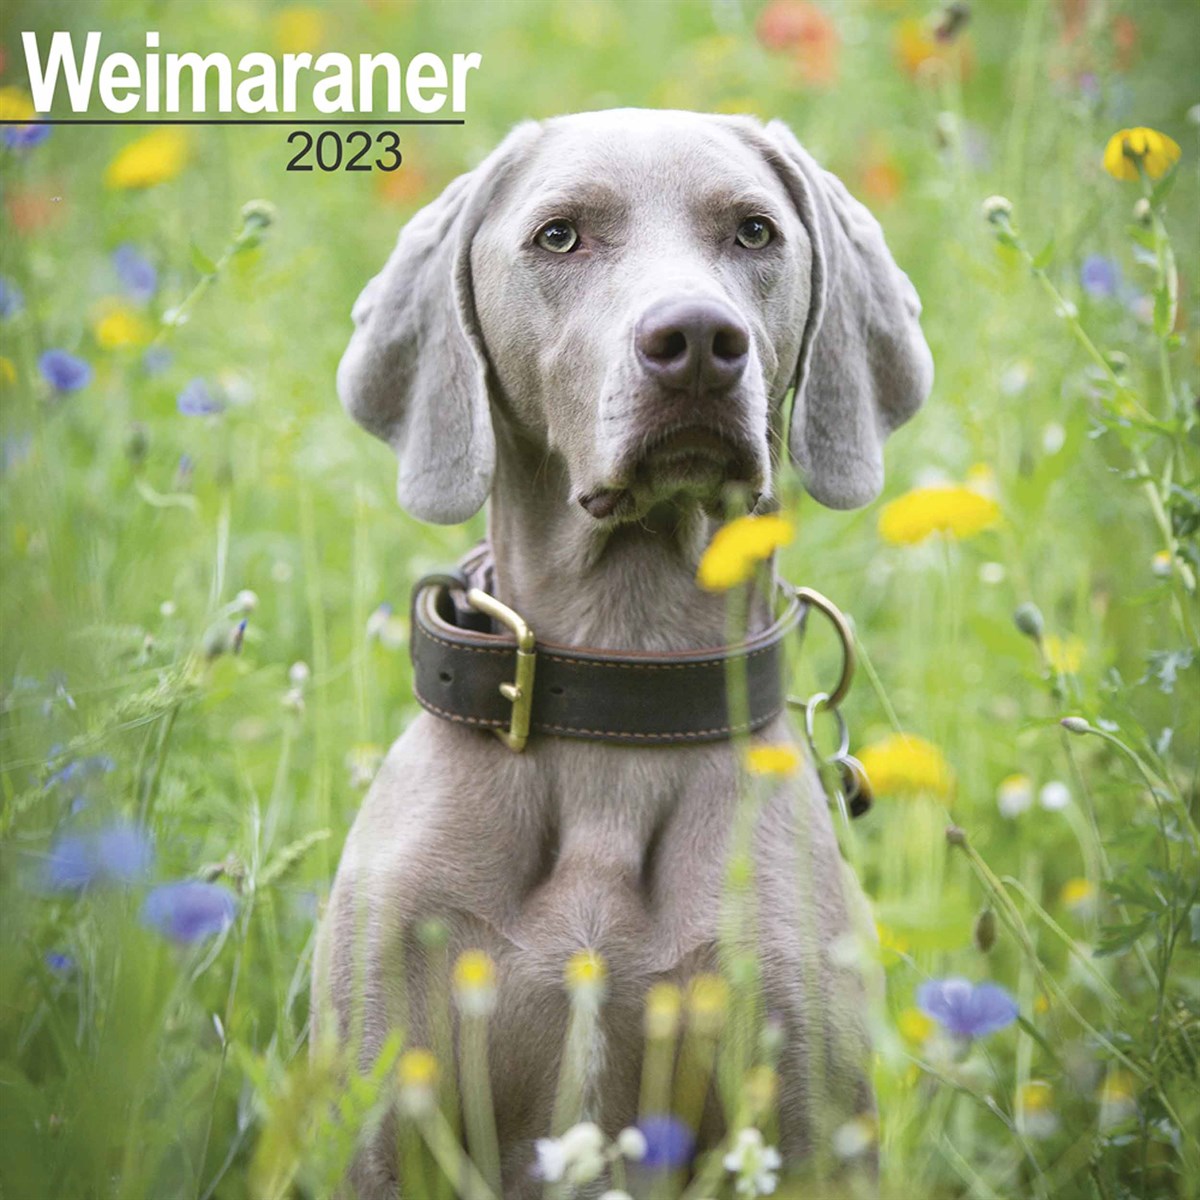 Weimaraner 2023 Calendars